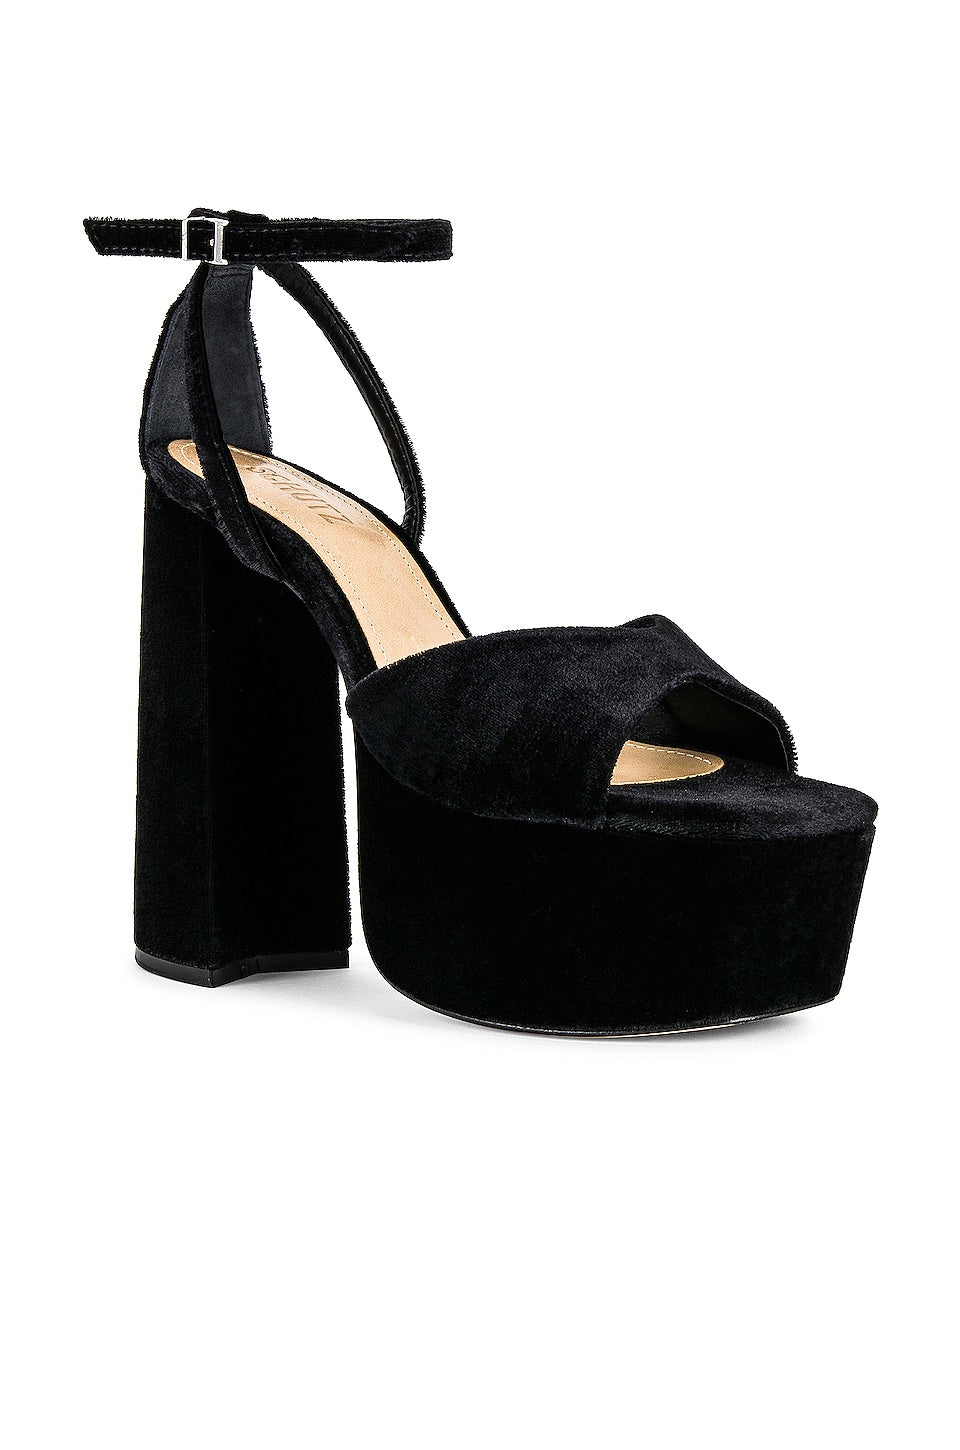 Schutz Aryia Platform Sandal in Black SIZE 8